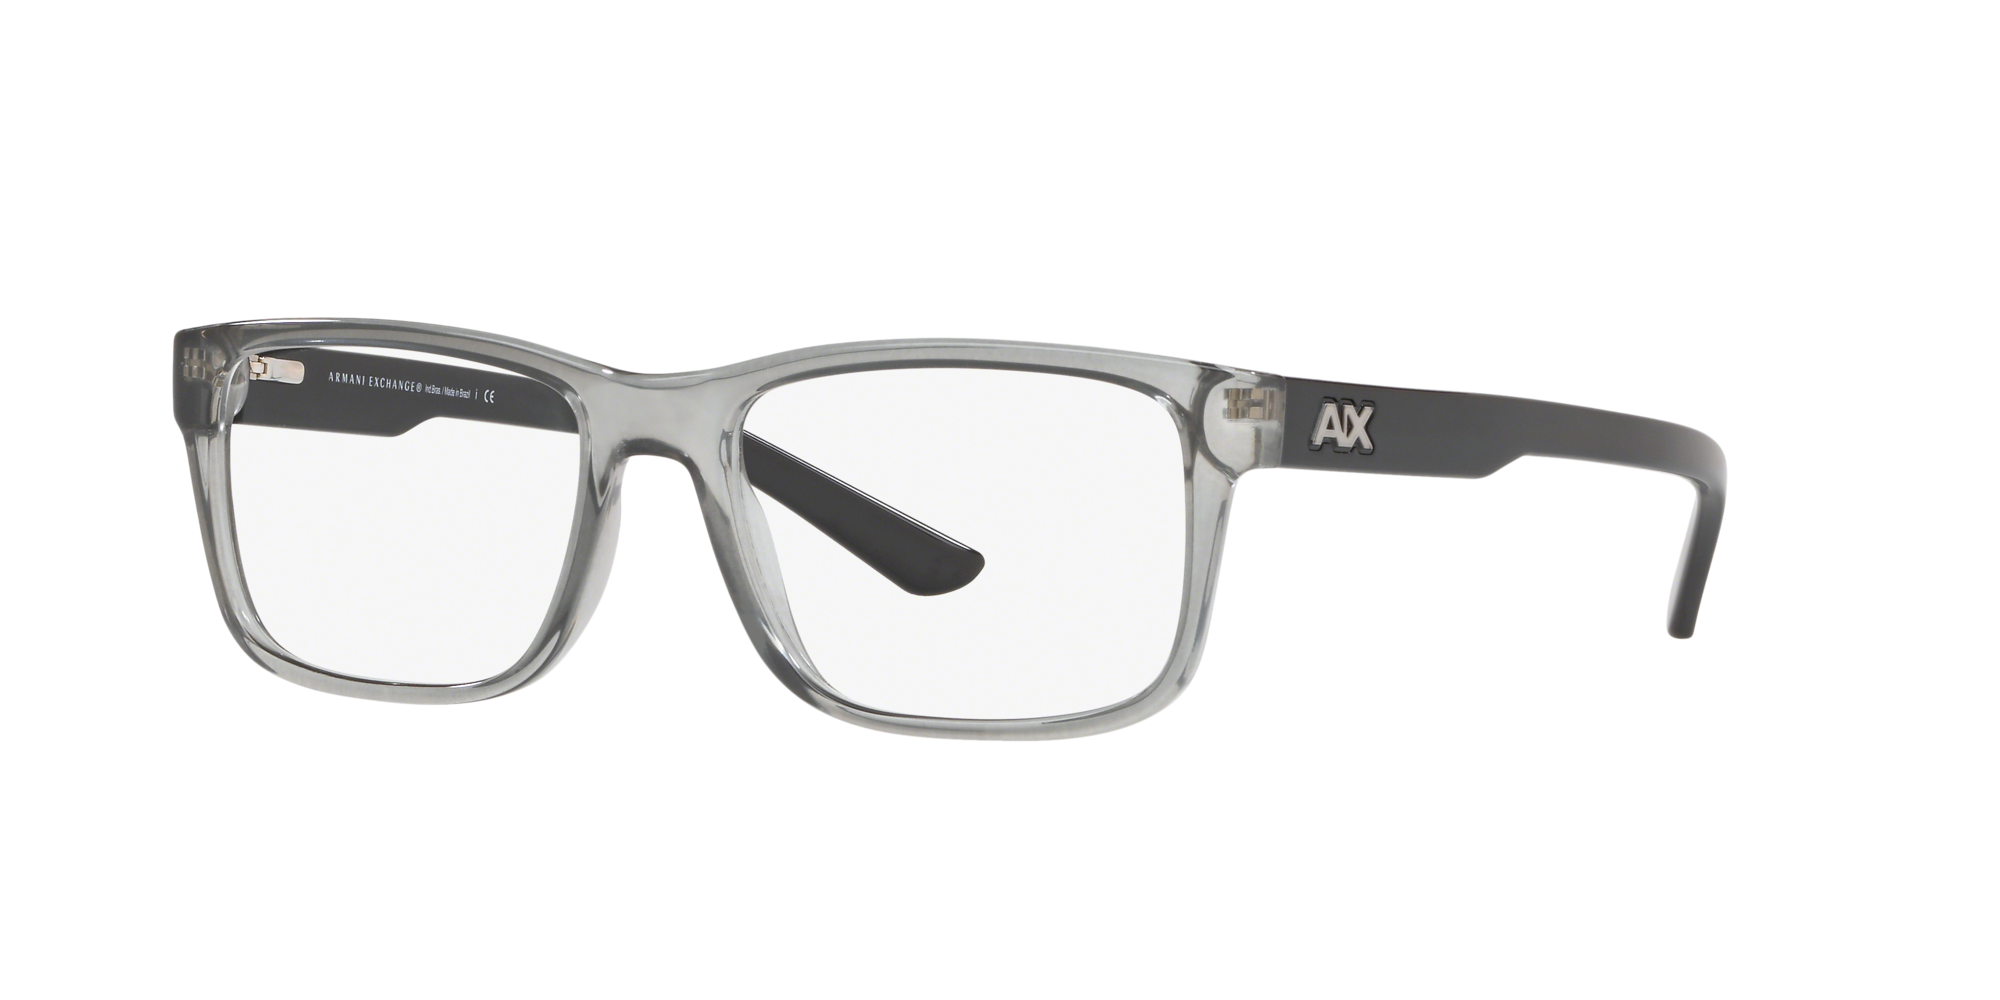 Angle_Left01 Armani Exchange AX 3016 Glasses Transparent / Transparent, Grey